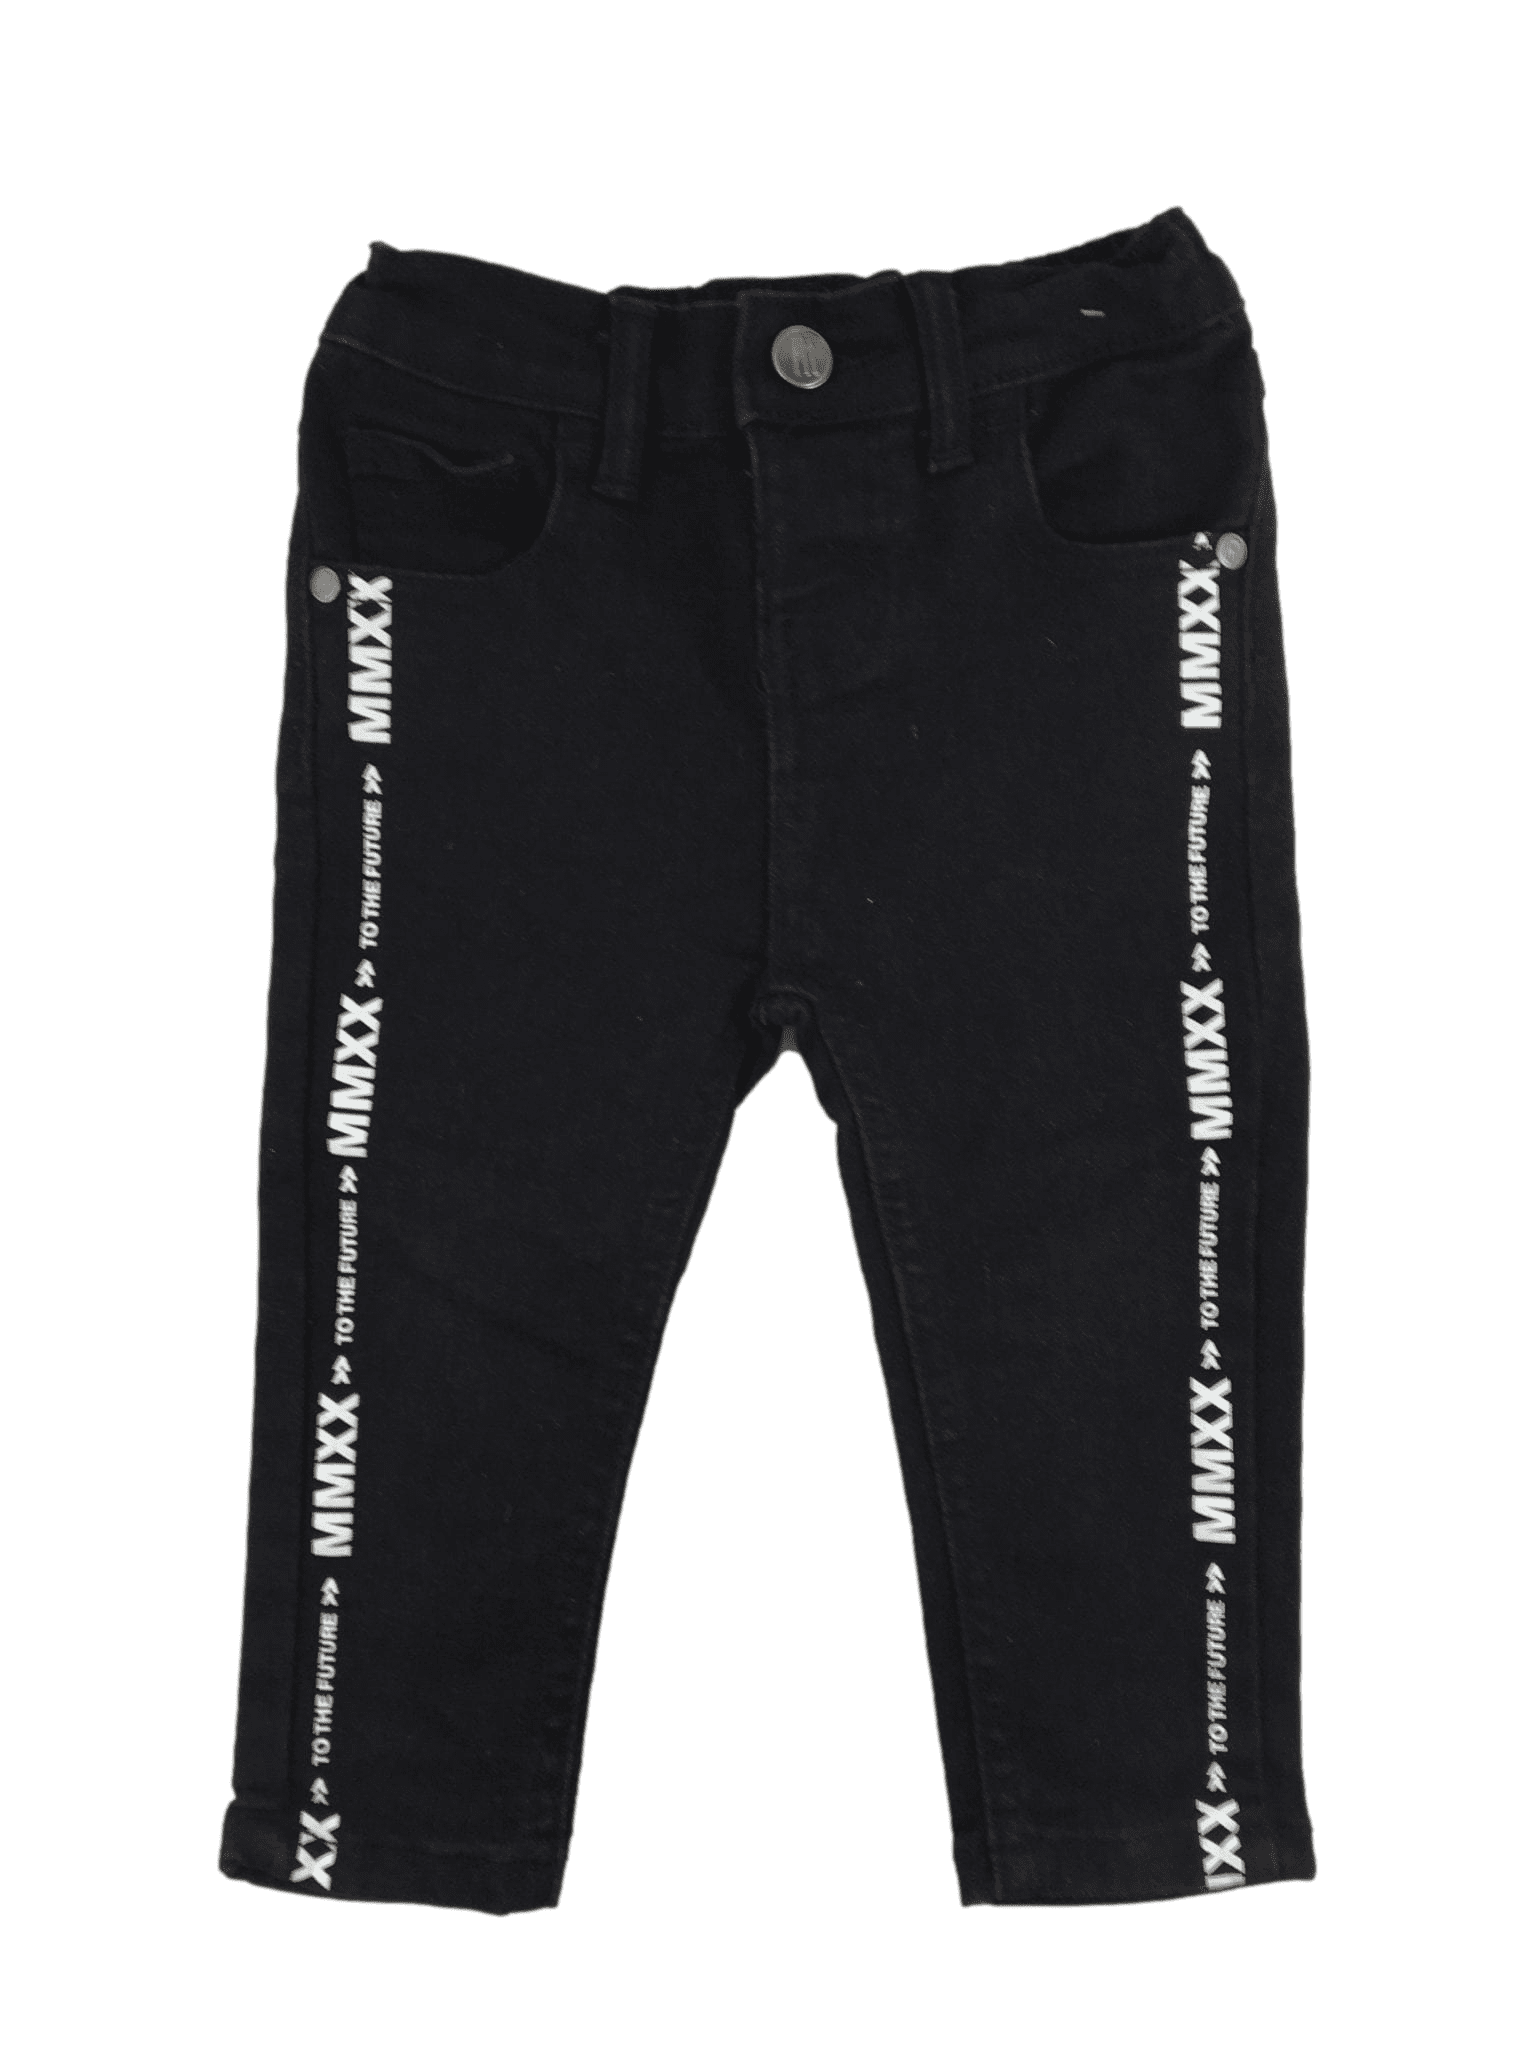 1-2Y Black White Writing Jeans - Mr Price - Petit Fox